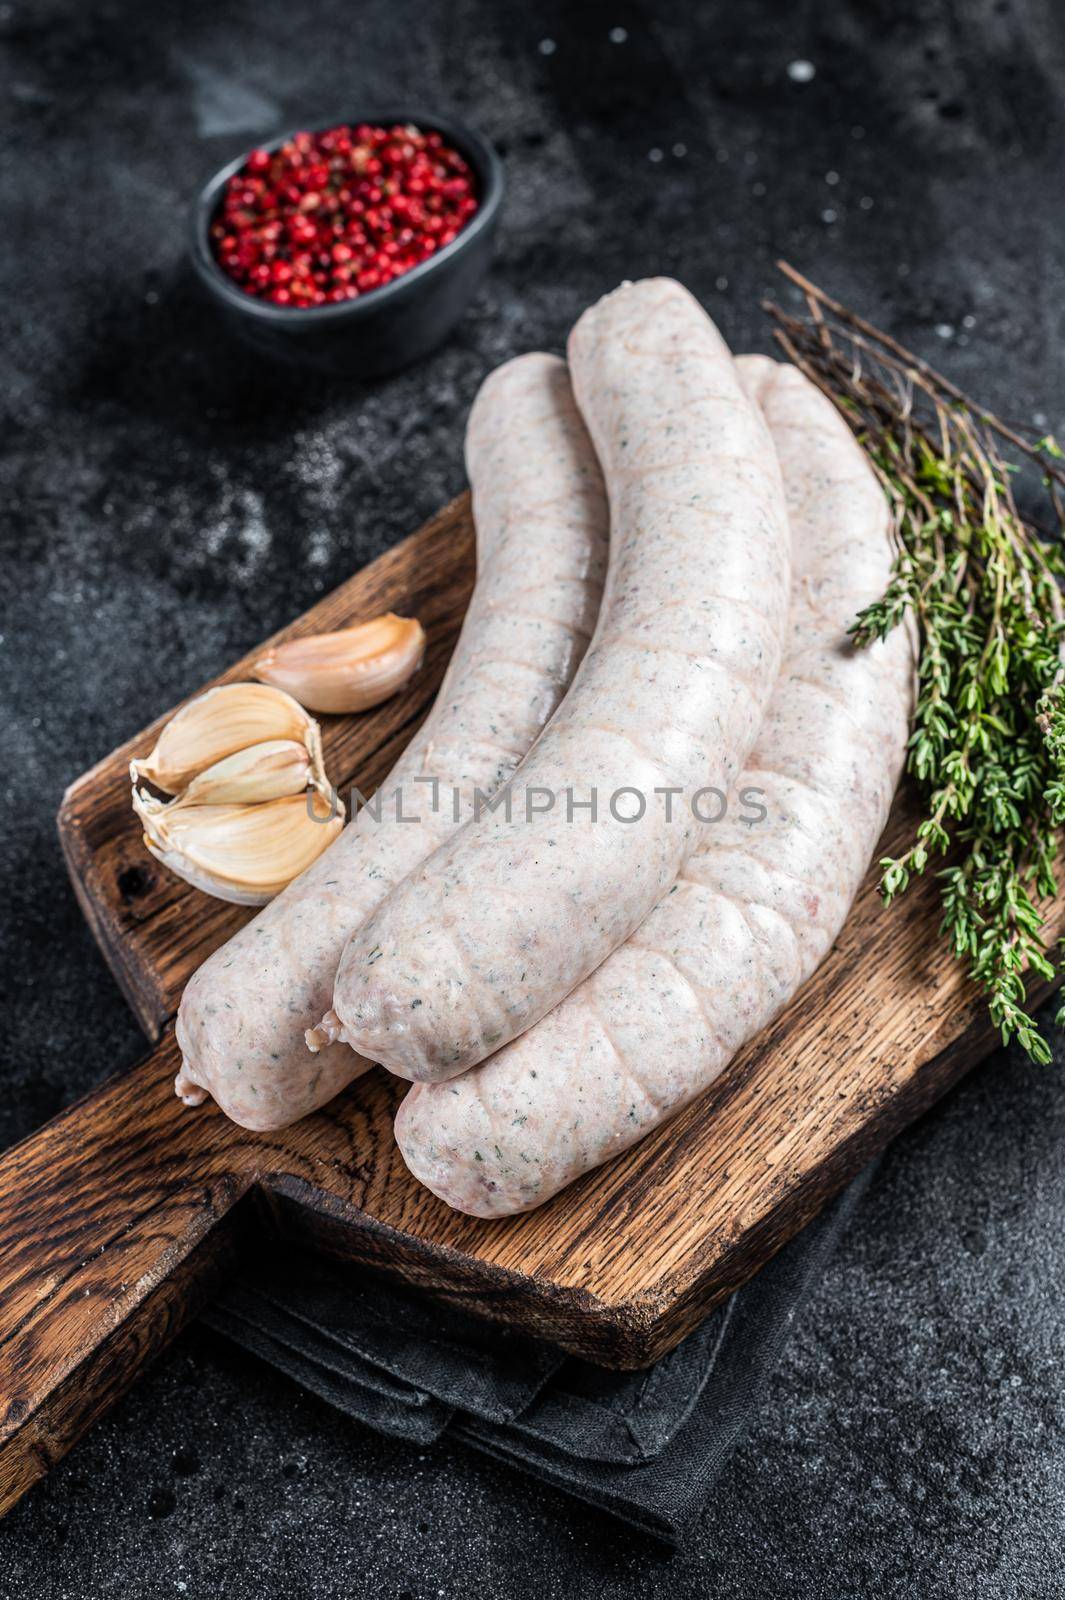 Raw Munich white sausage weisswurst on wooden board. Black background. Top view.